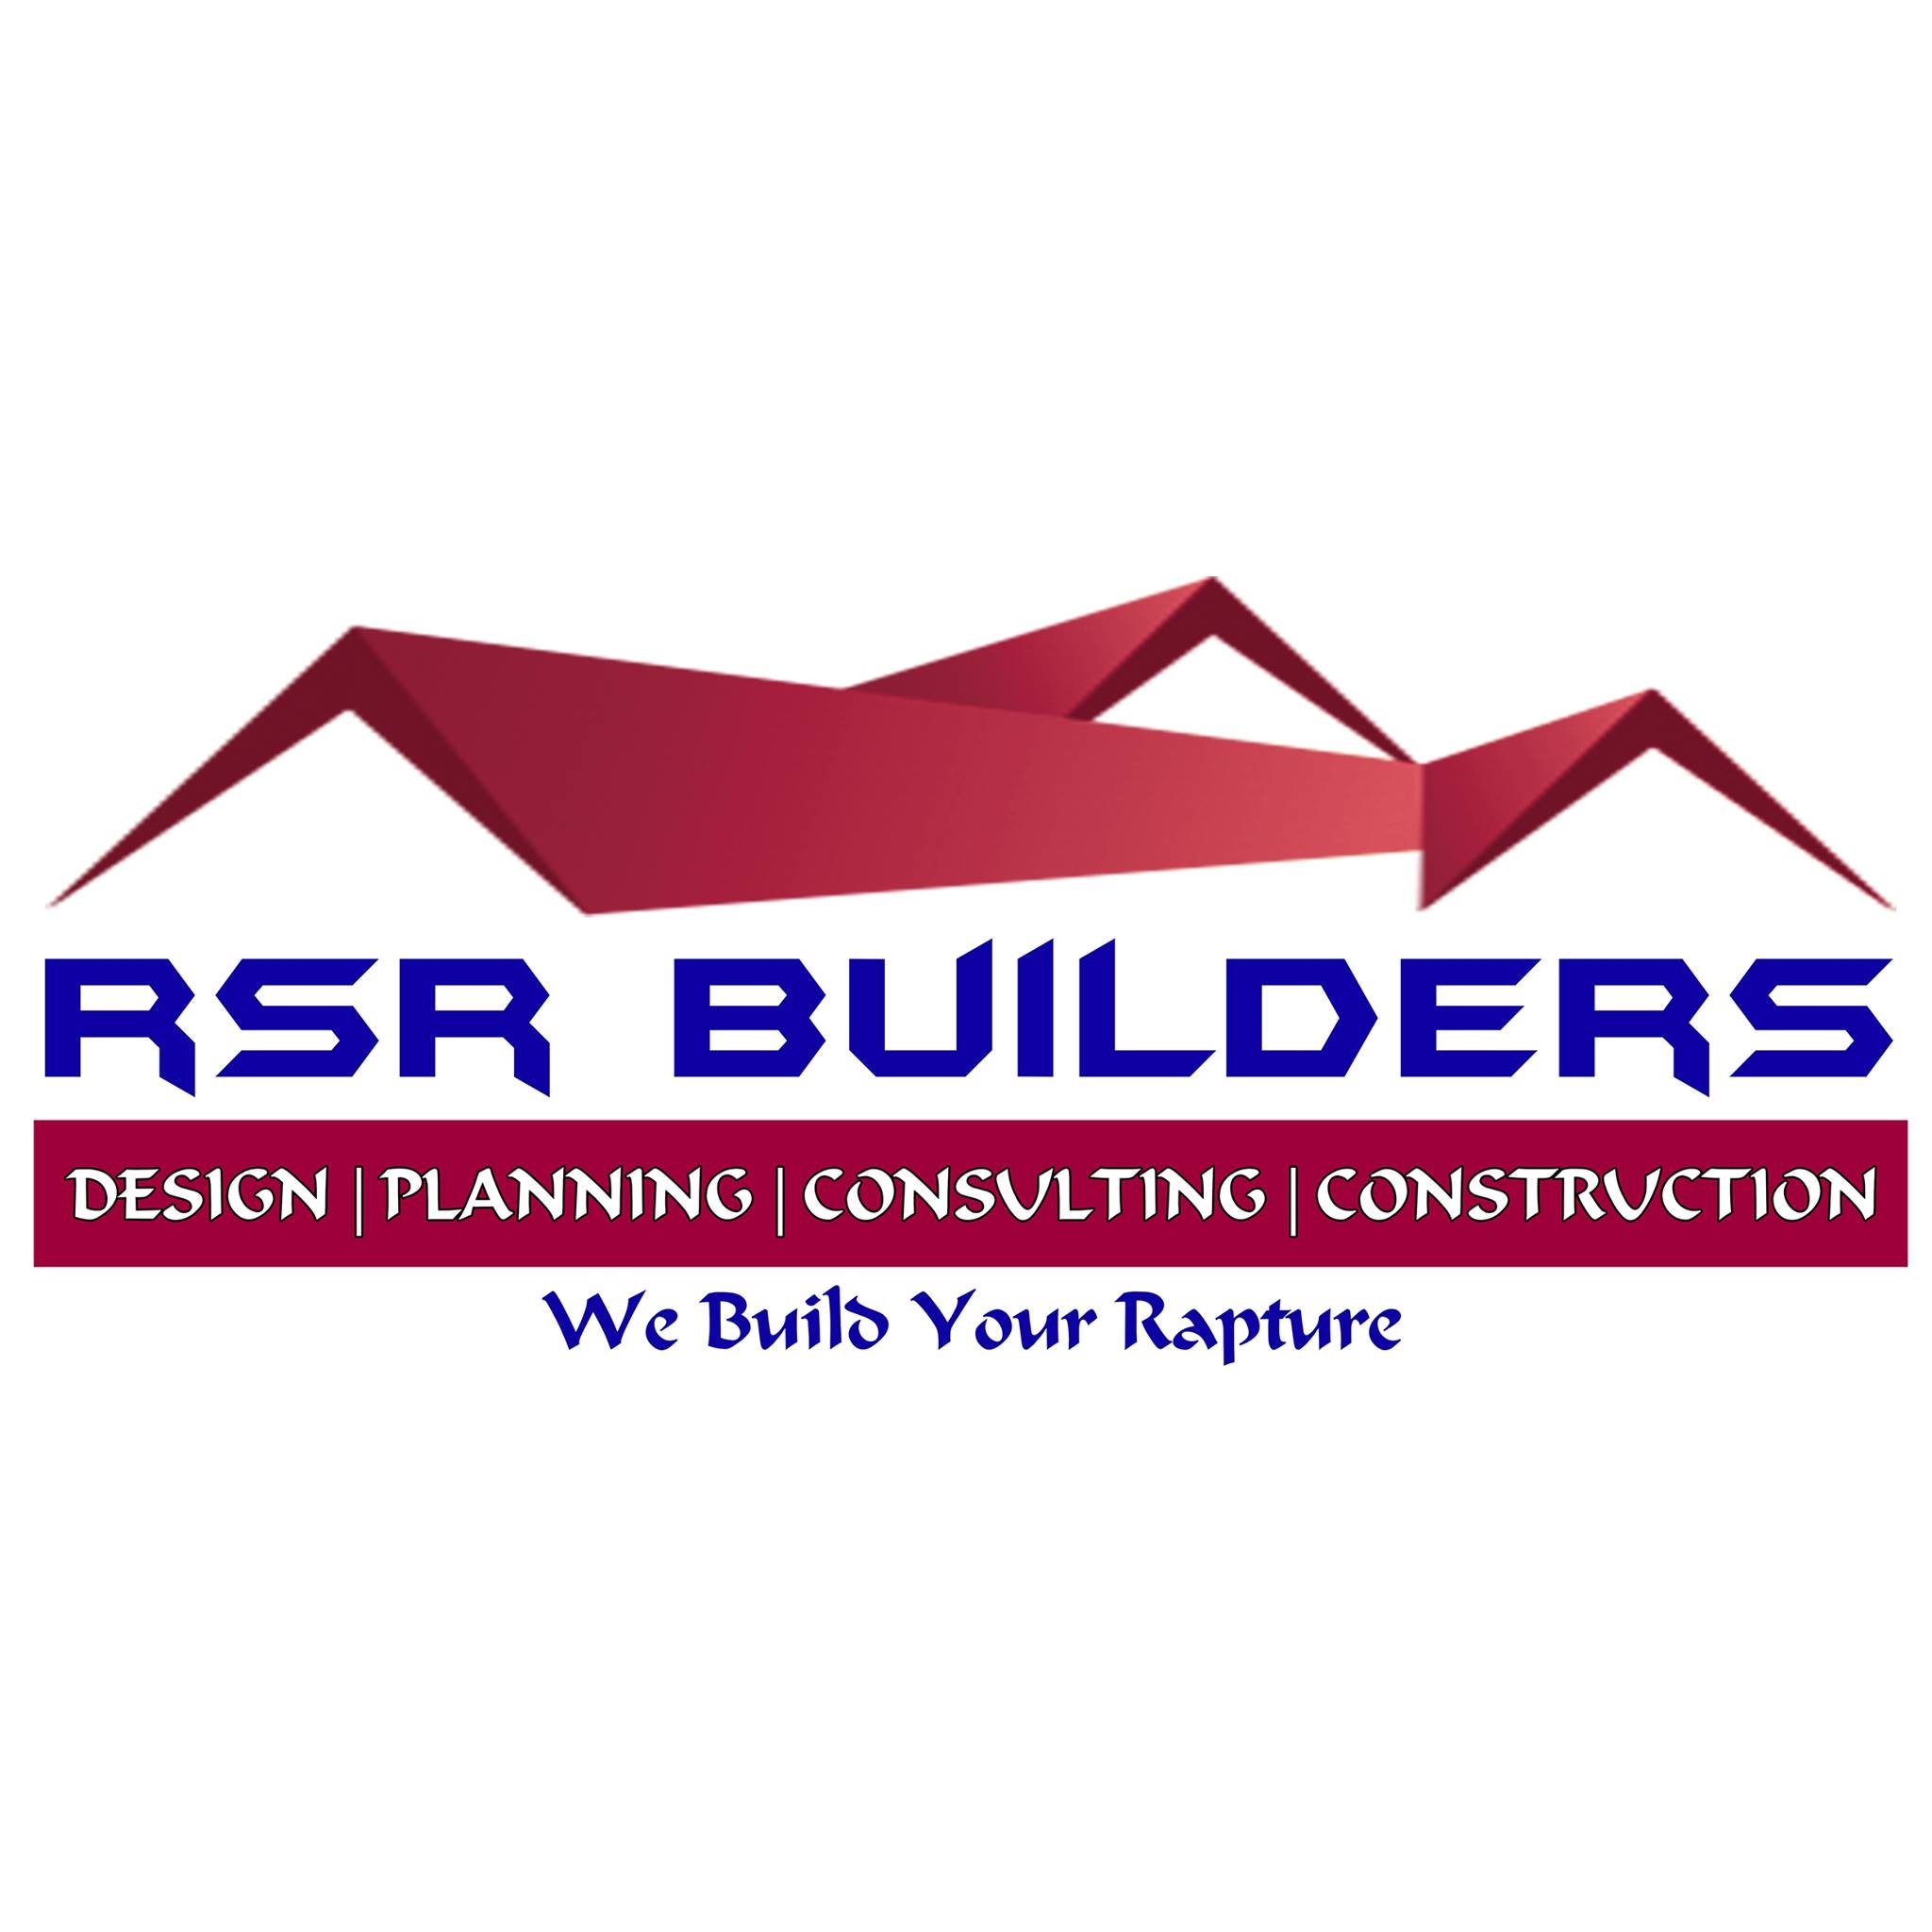 RSR BUILDERS|IT Services|Professional Services